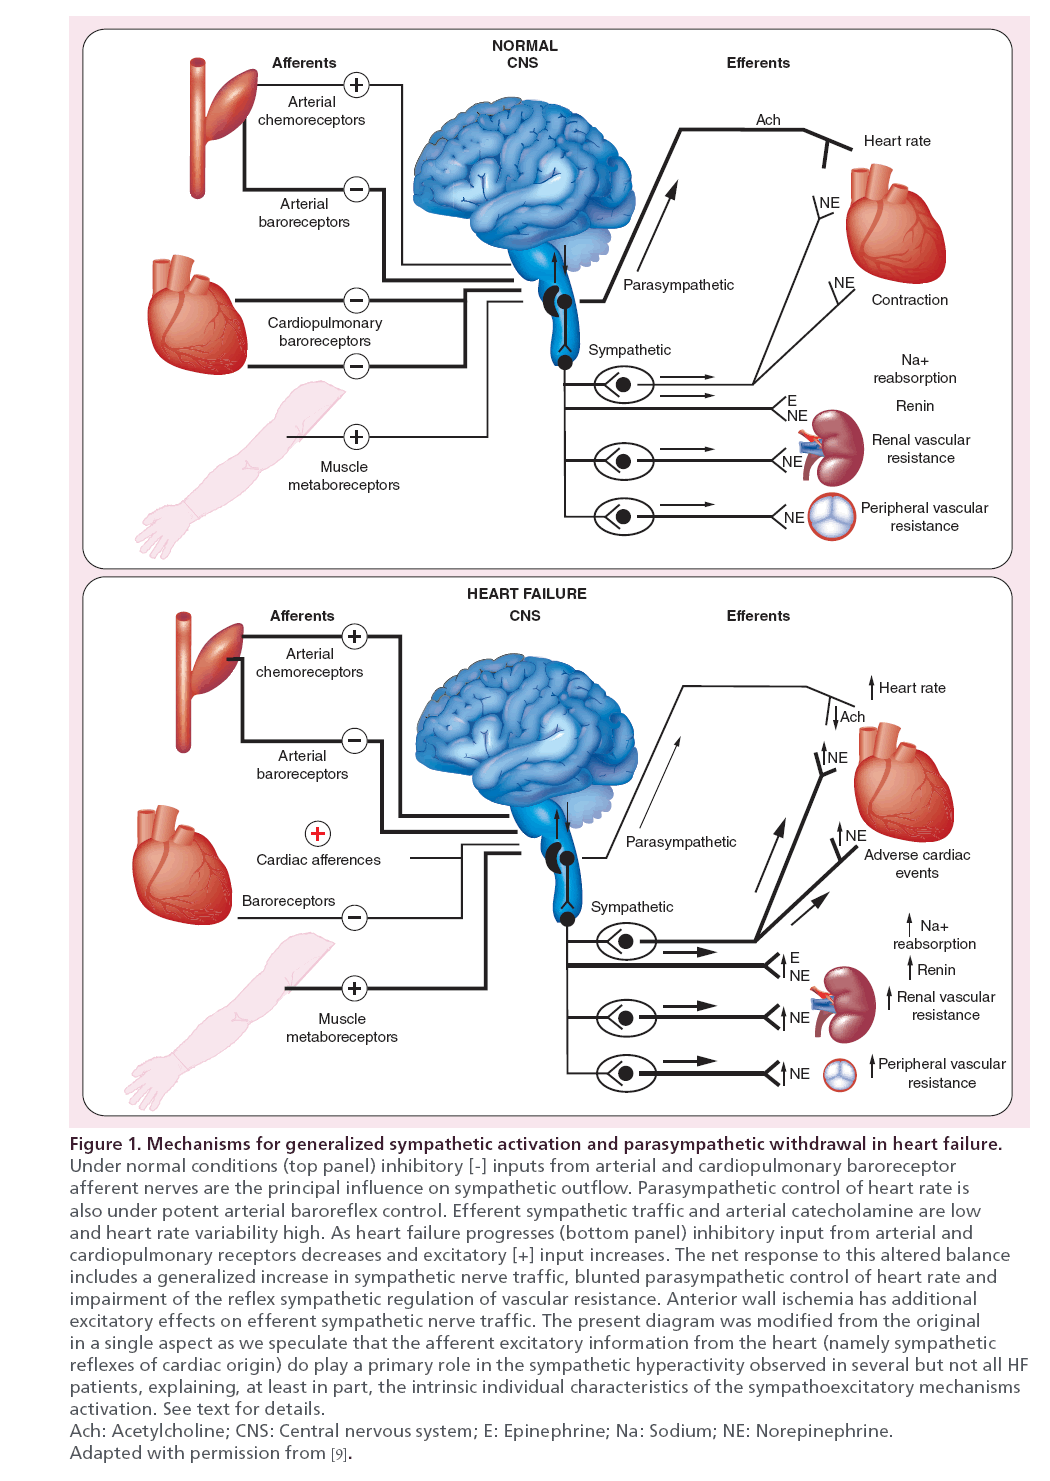 interventional-cardiology-Mechanisms-generalized